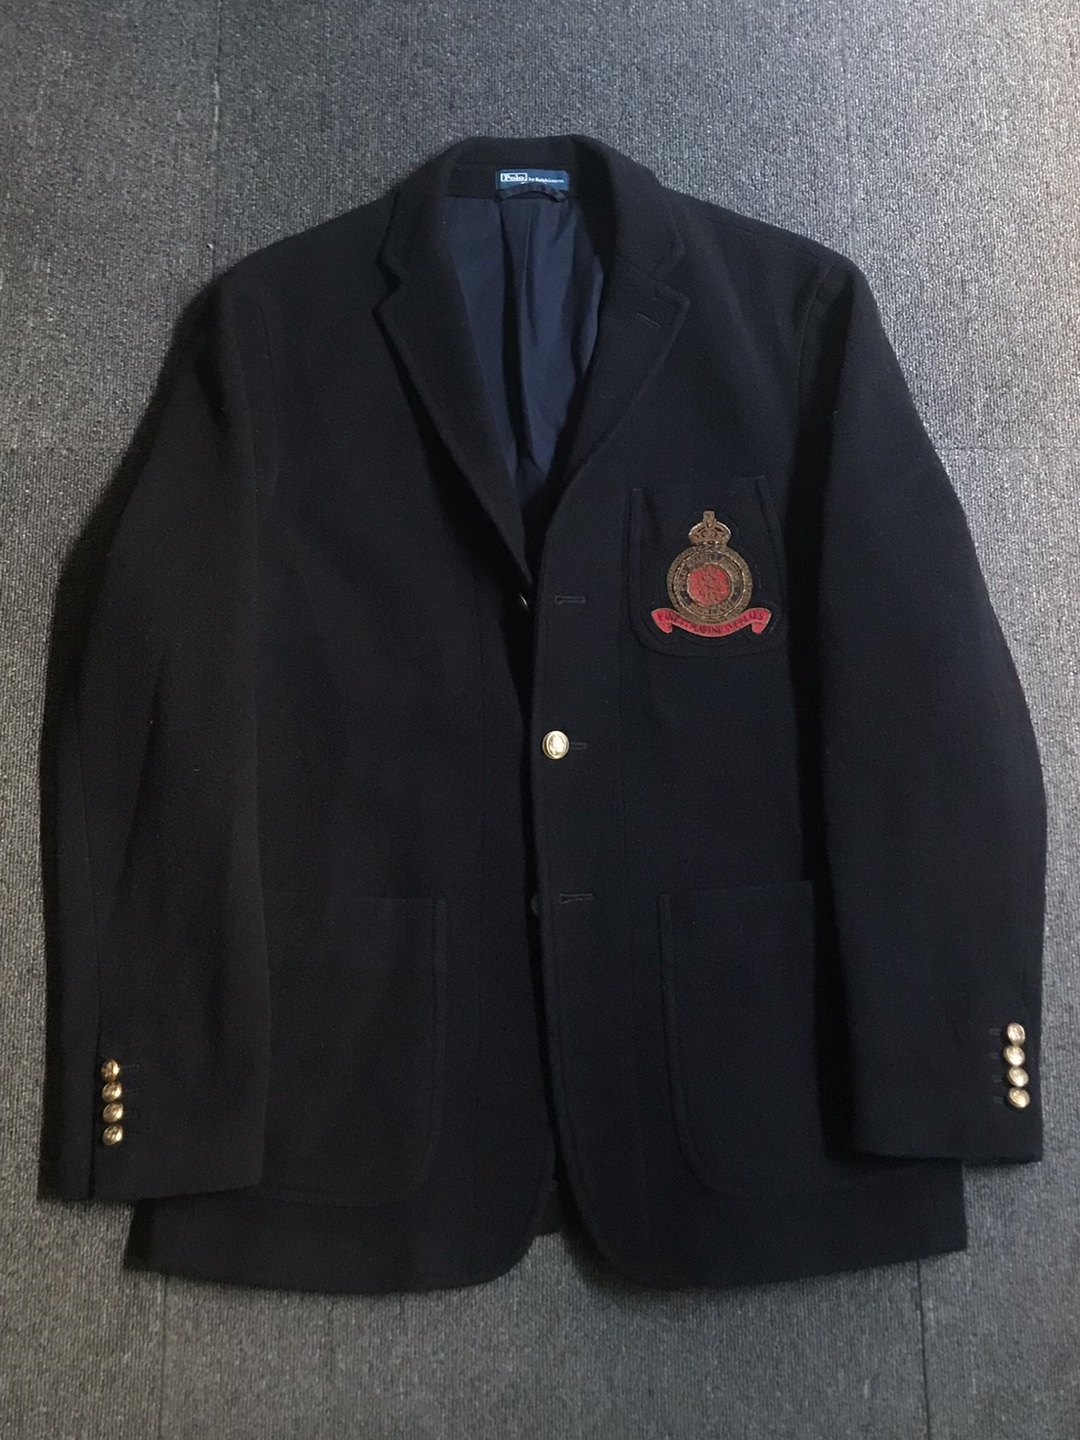 Polo RL embroidered dark navy 3/2 wool/nylon  sport jacket (42R size, 103~ 추천)